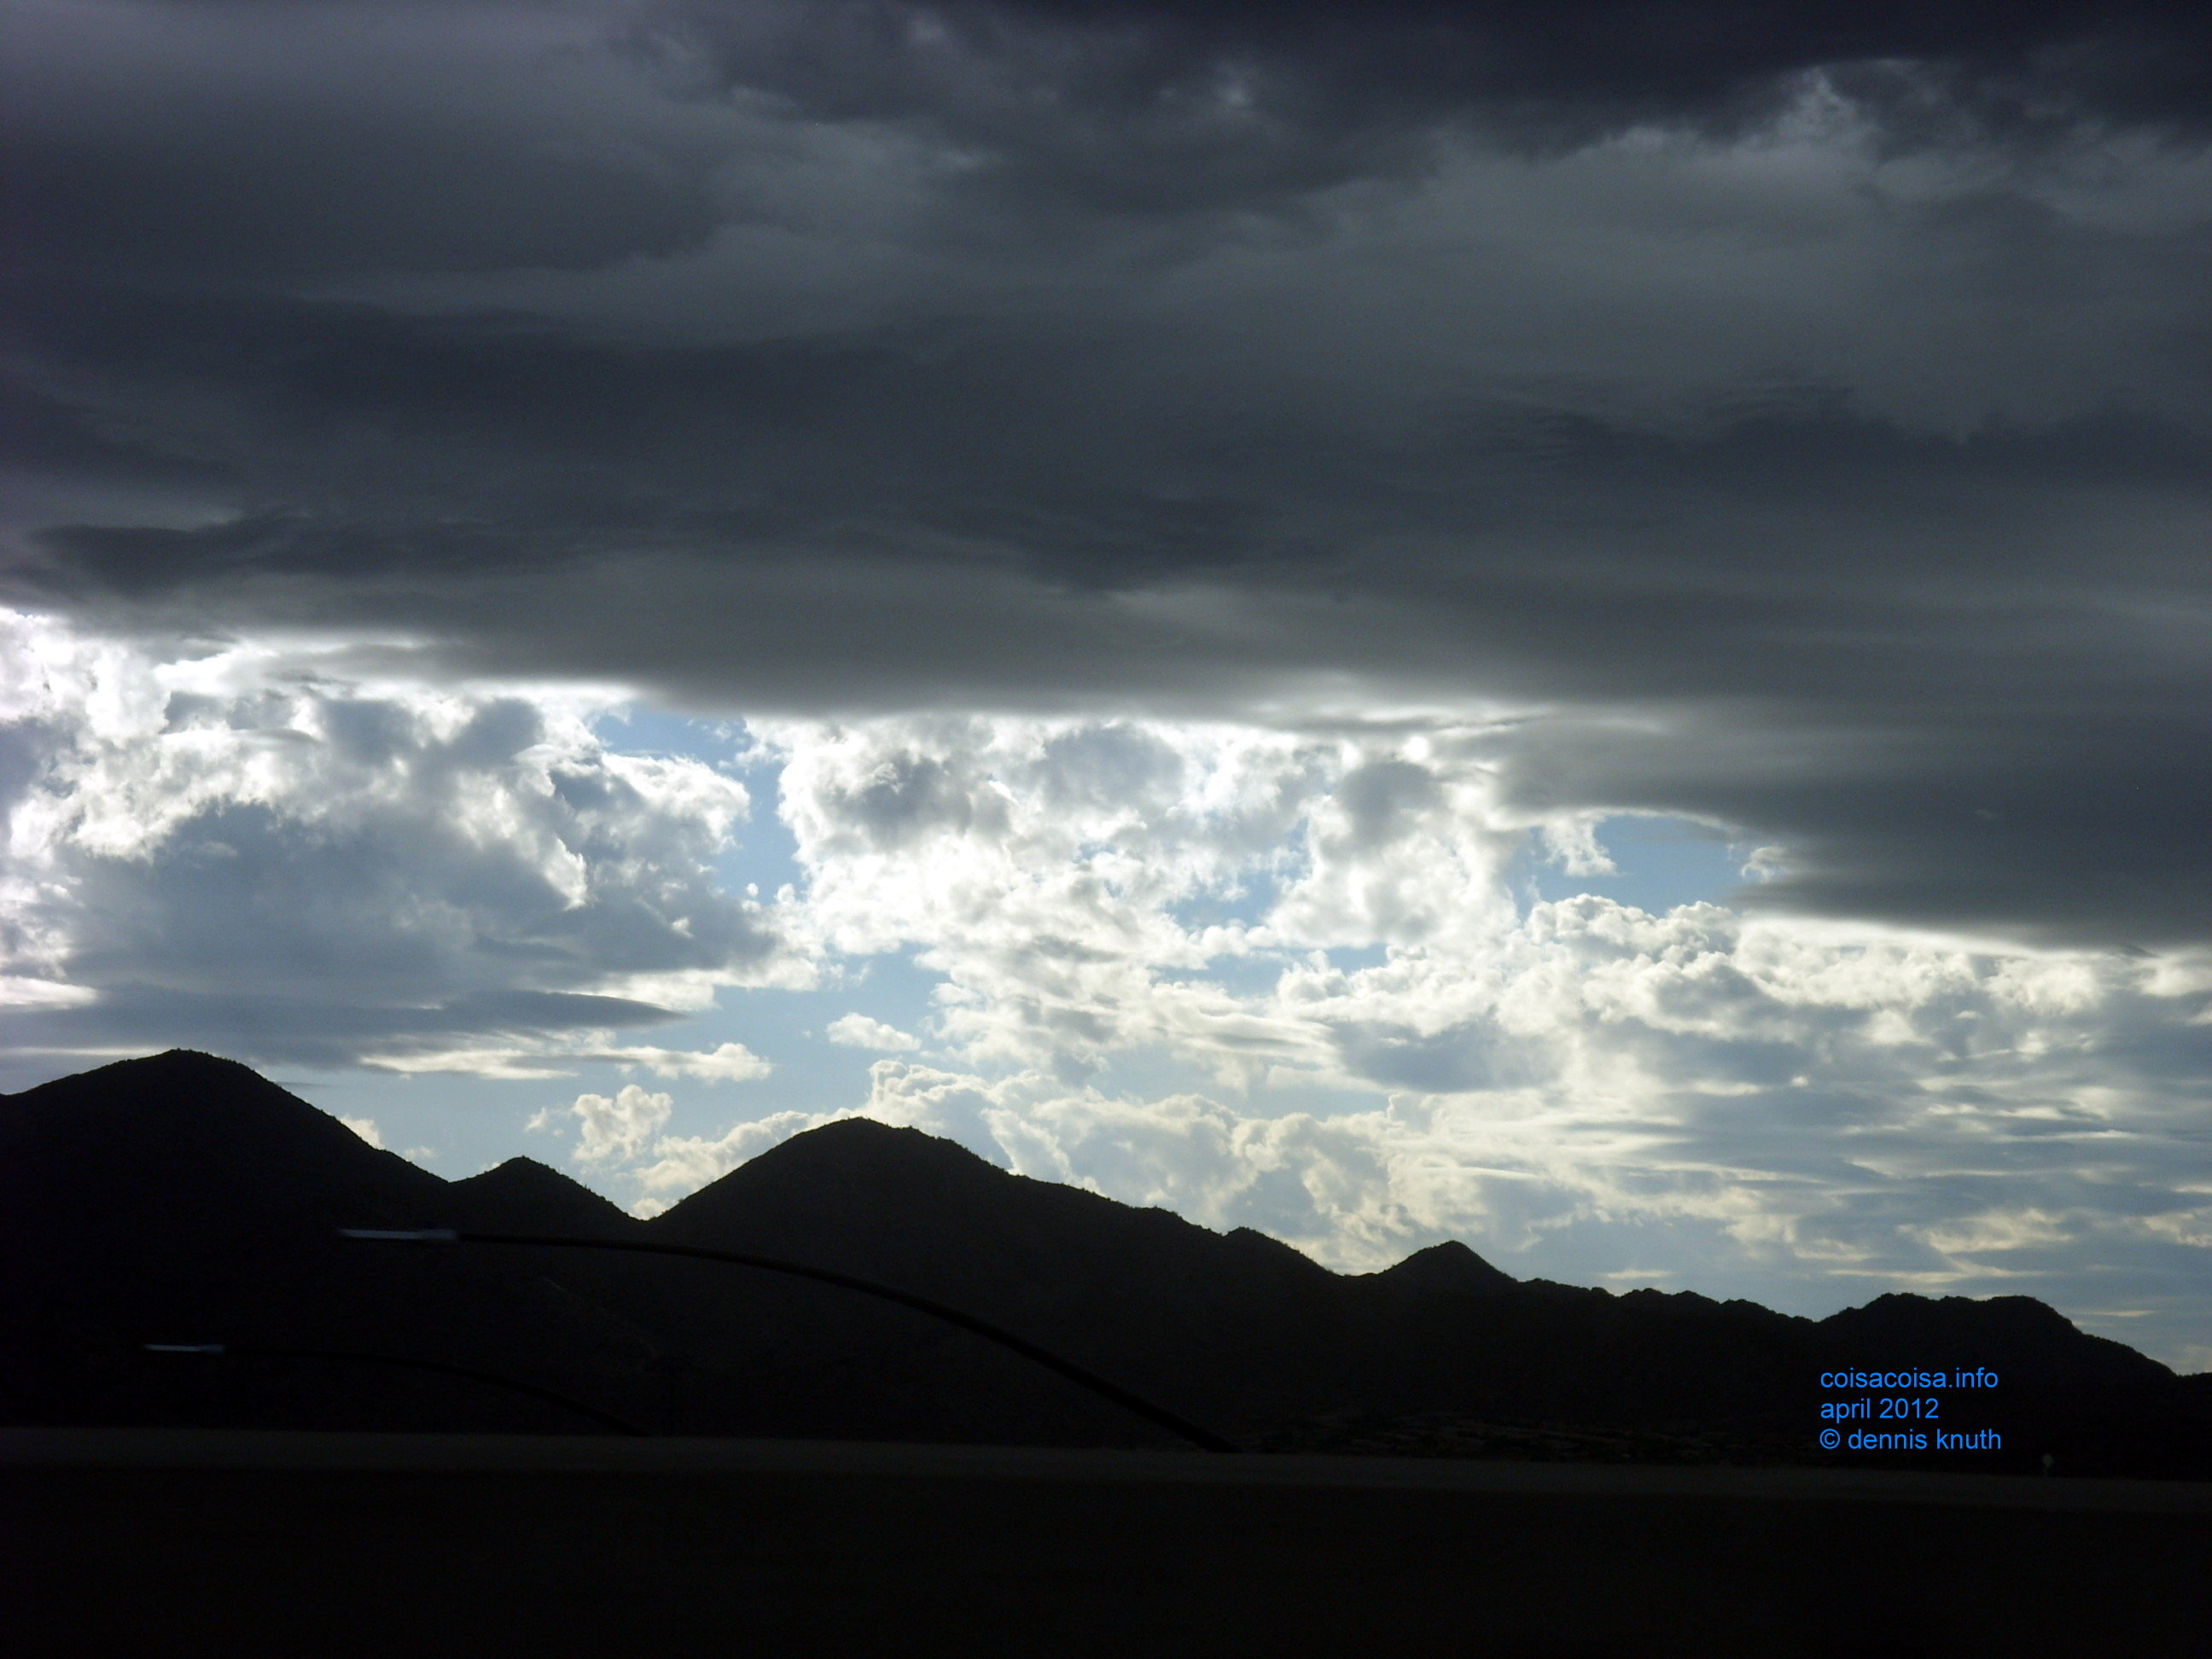 Clouds threatening rain in Phoenix Arizona